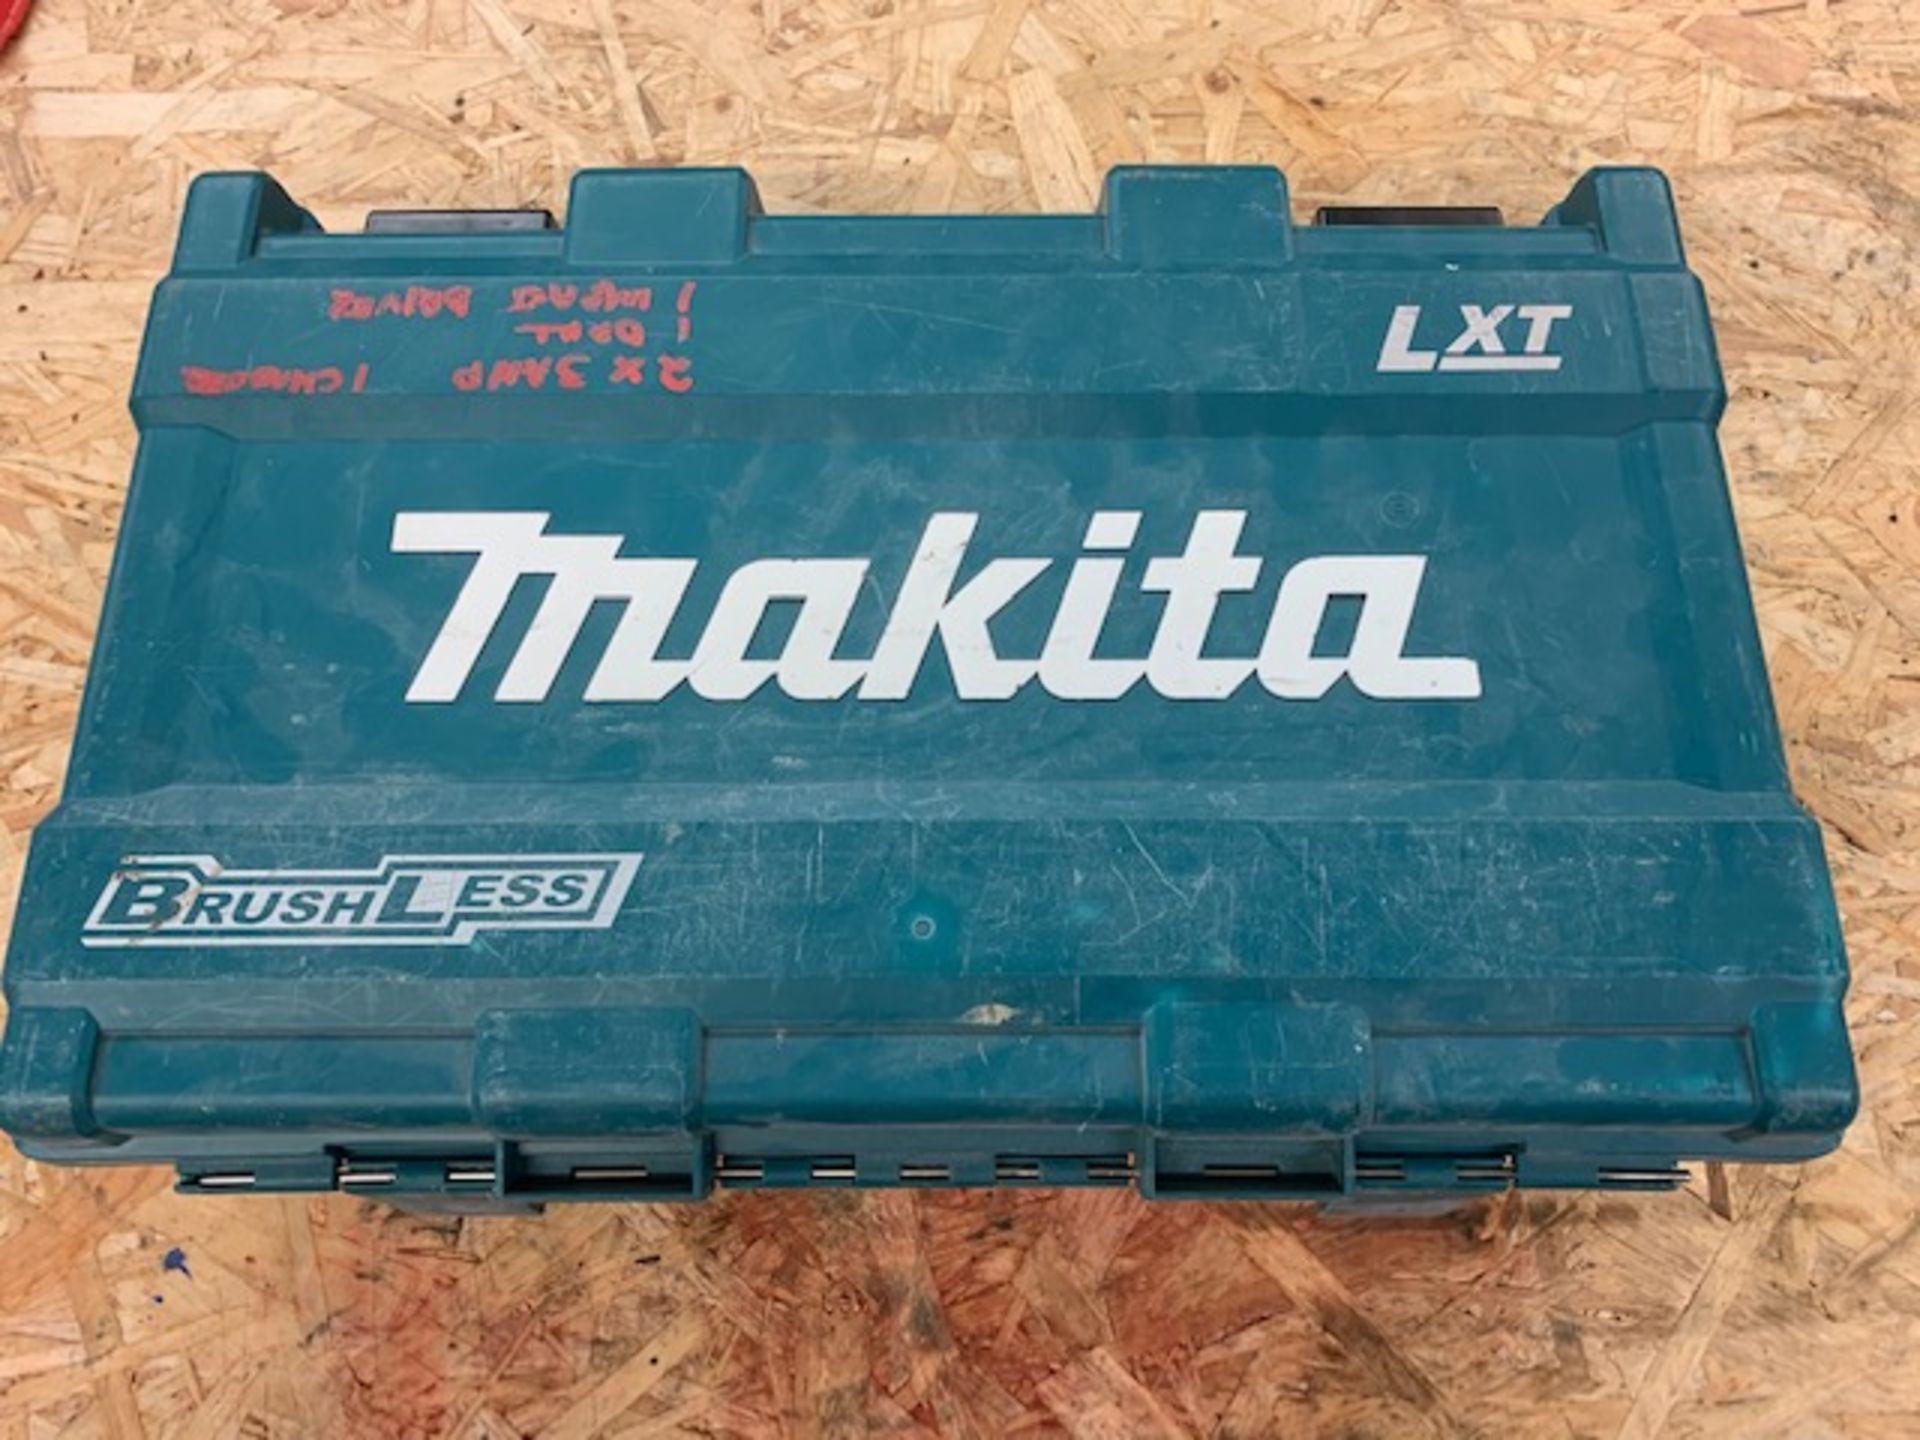 Makita combi drill set. 1x DHP483 drill, 1x DTD155 impact driver 2x3.0ah lithium batteries, 1 x - Image 2 of 2